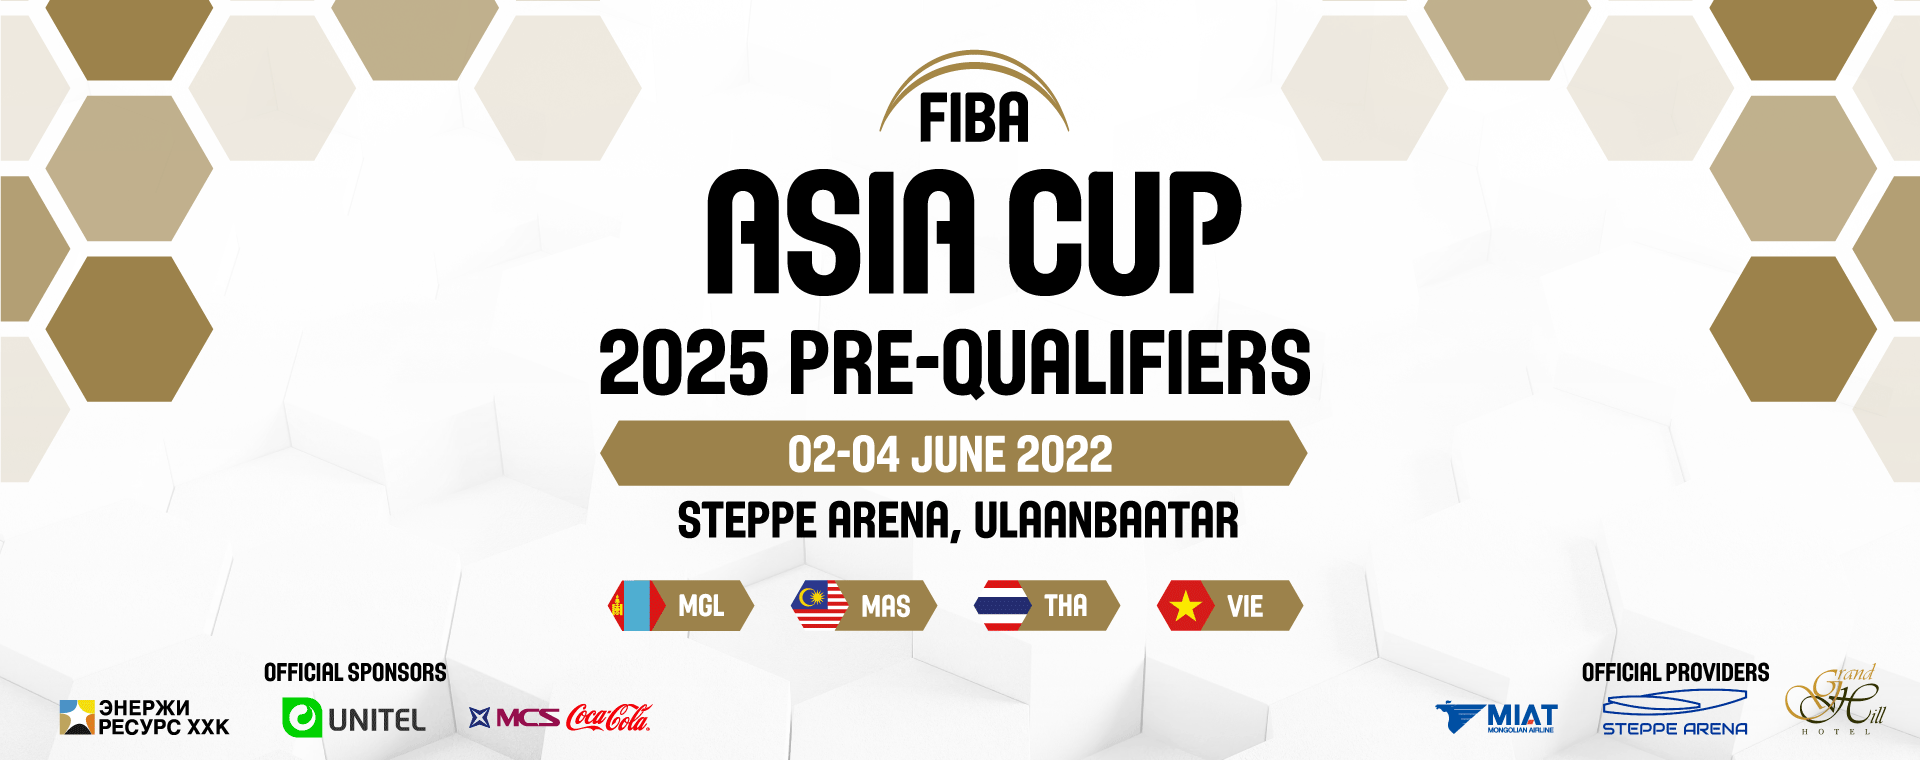 Steppe Arena FIBA Asia Cup 2025 PreQualifiersUlaanbaatar, Mongolia